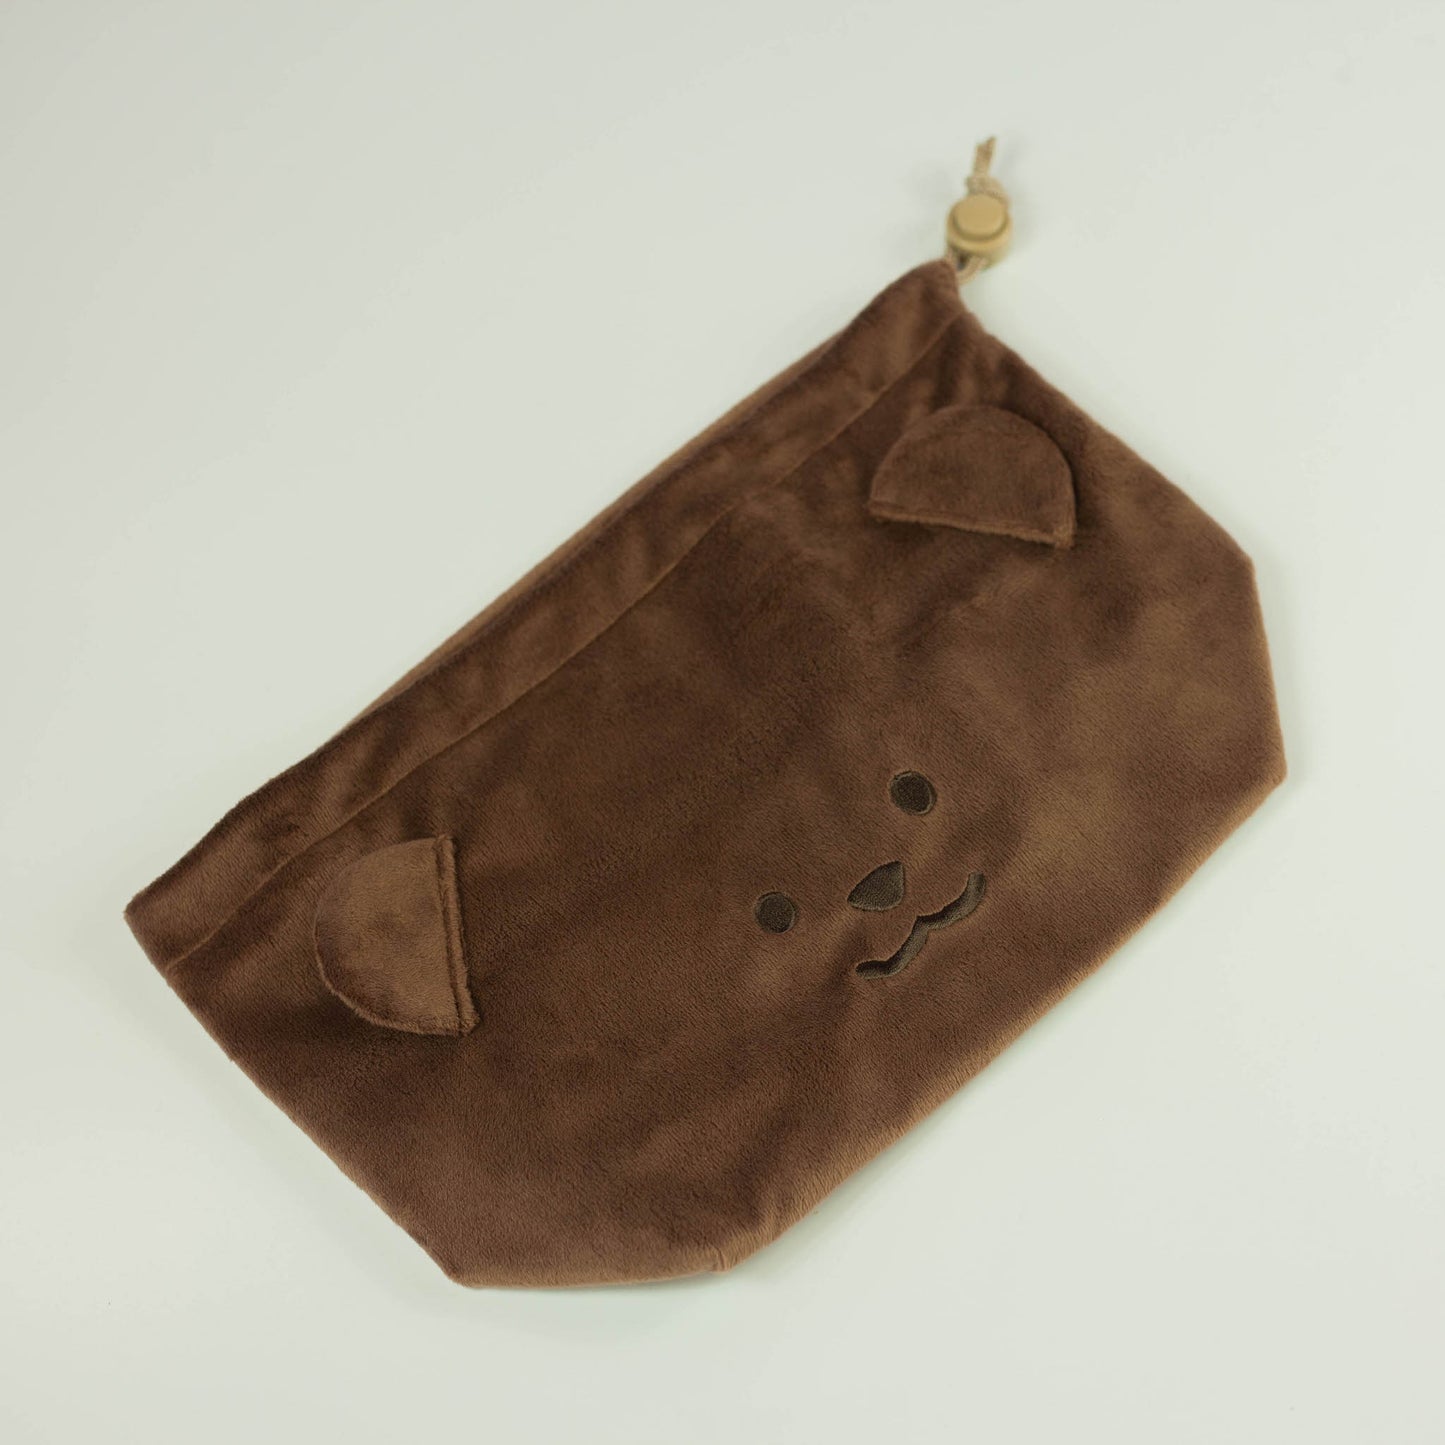 Animal Friends Bento Bag | Kuma (Bear)